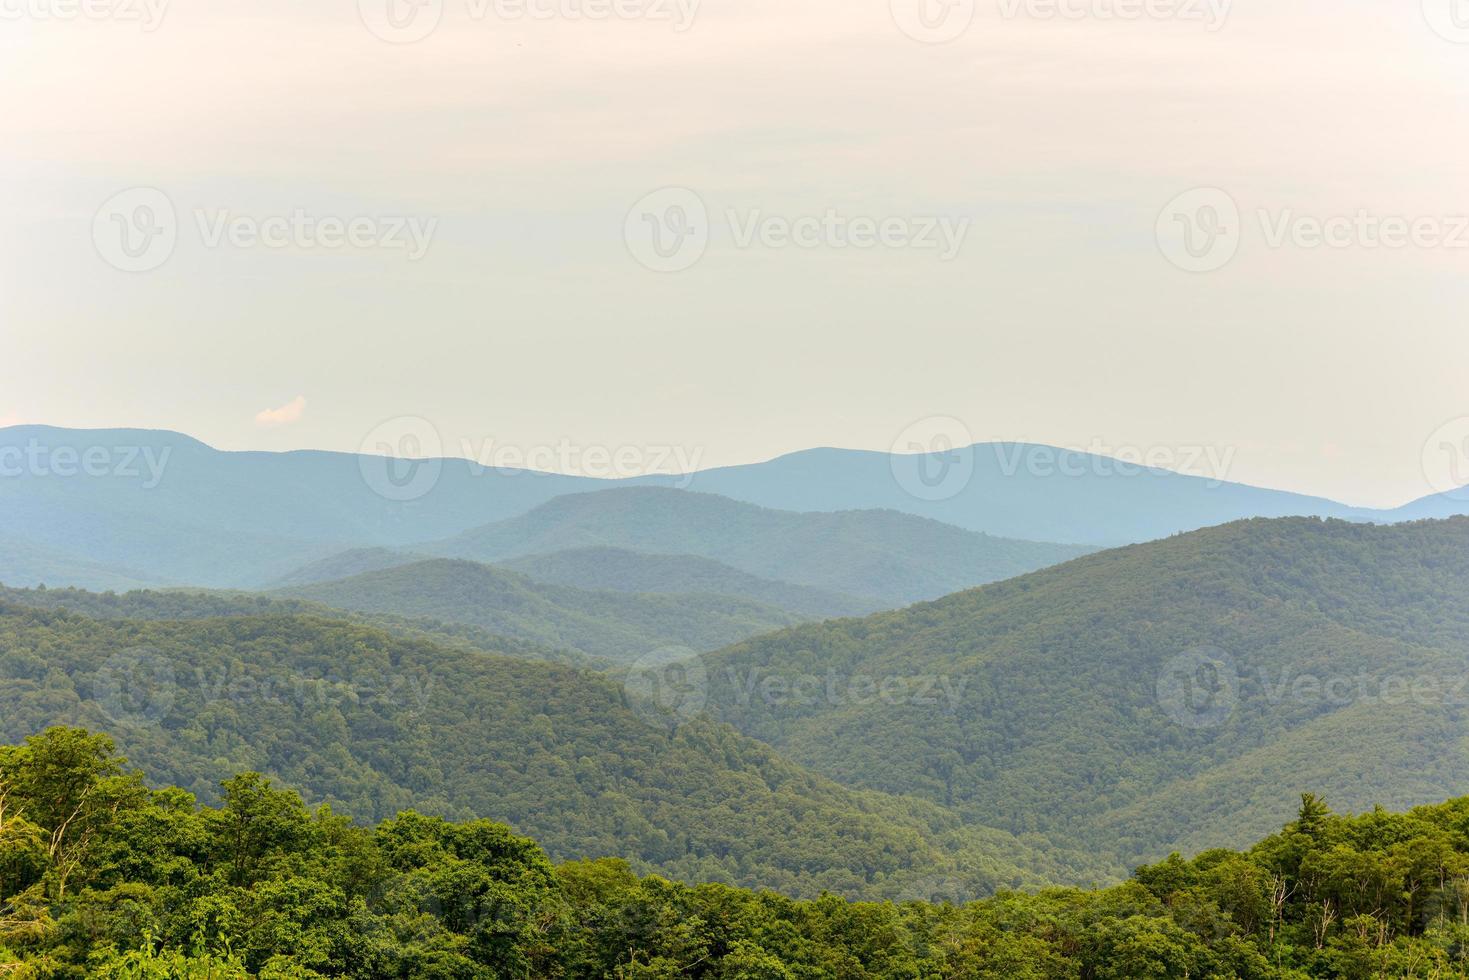 Shenandoah Valley and Blue Ridge Mountains from Shenandoah National Park, Virginia photo